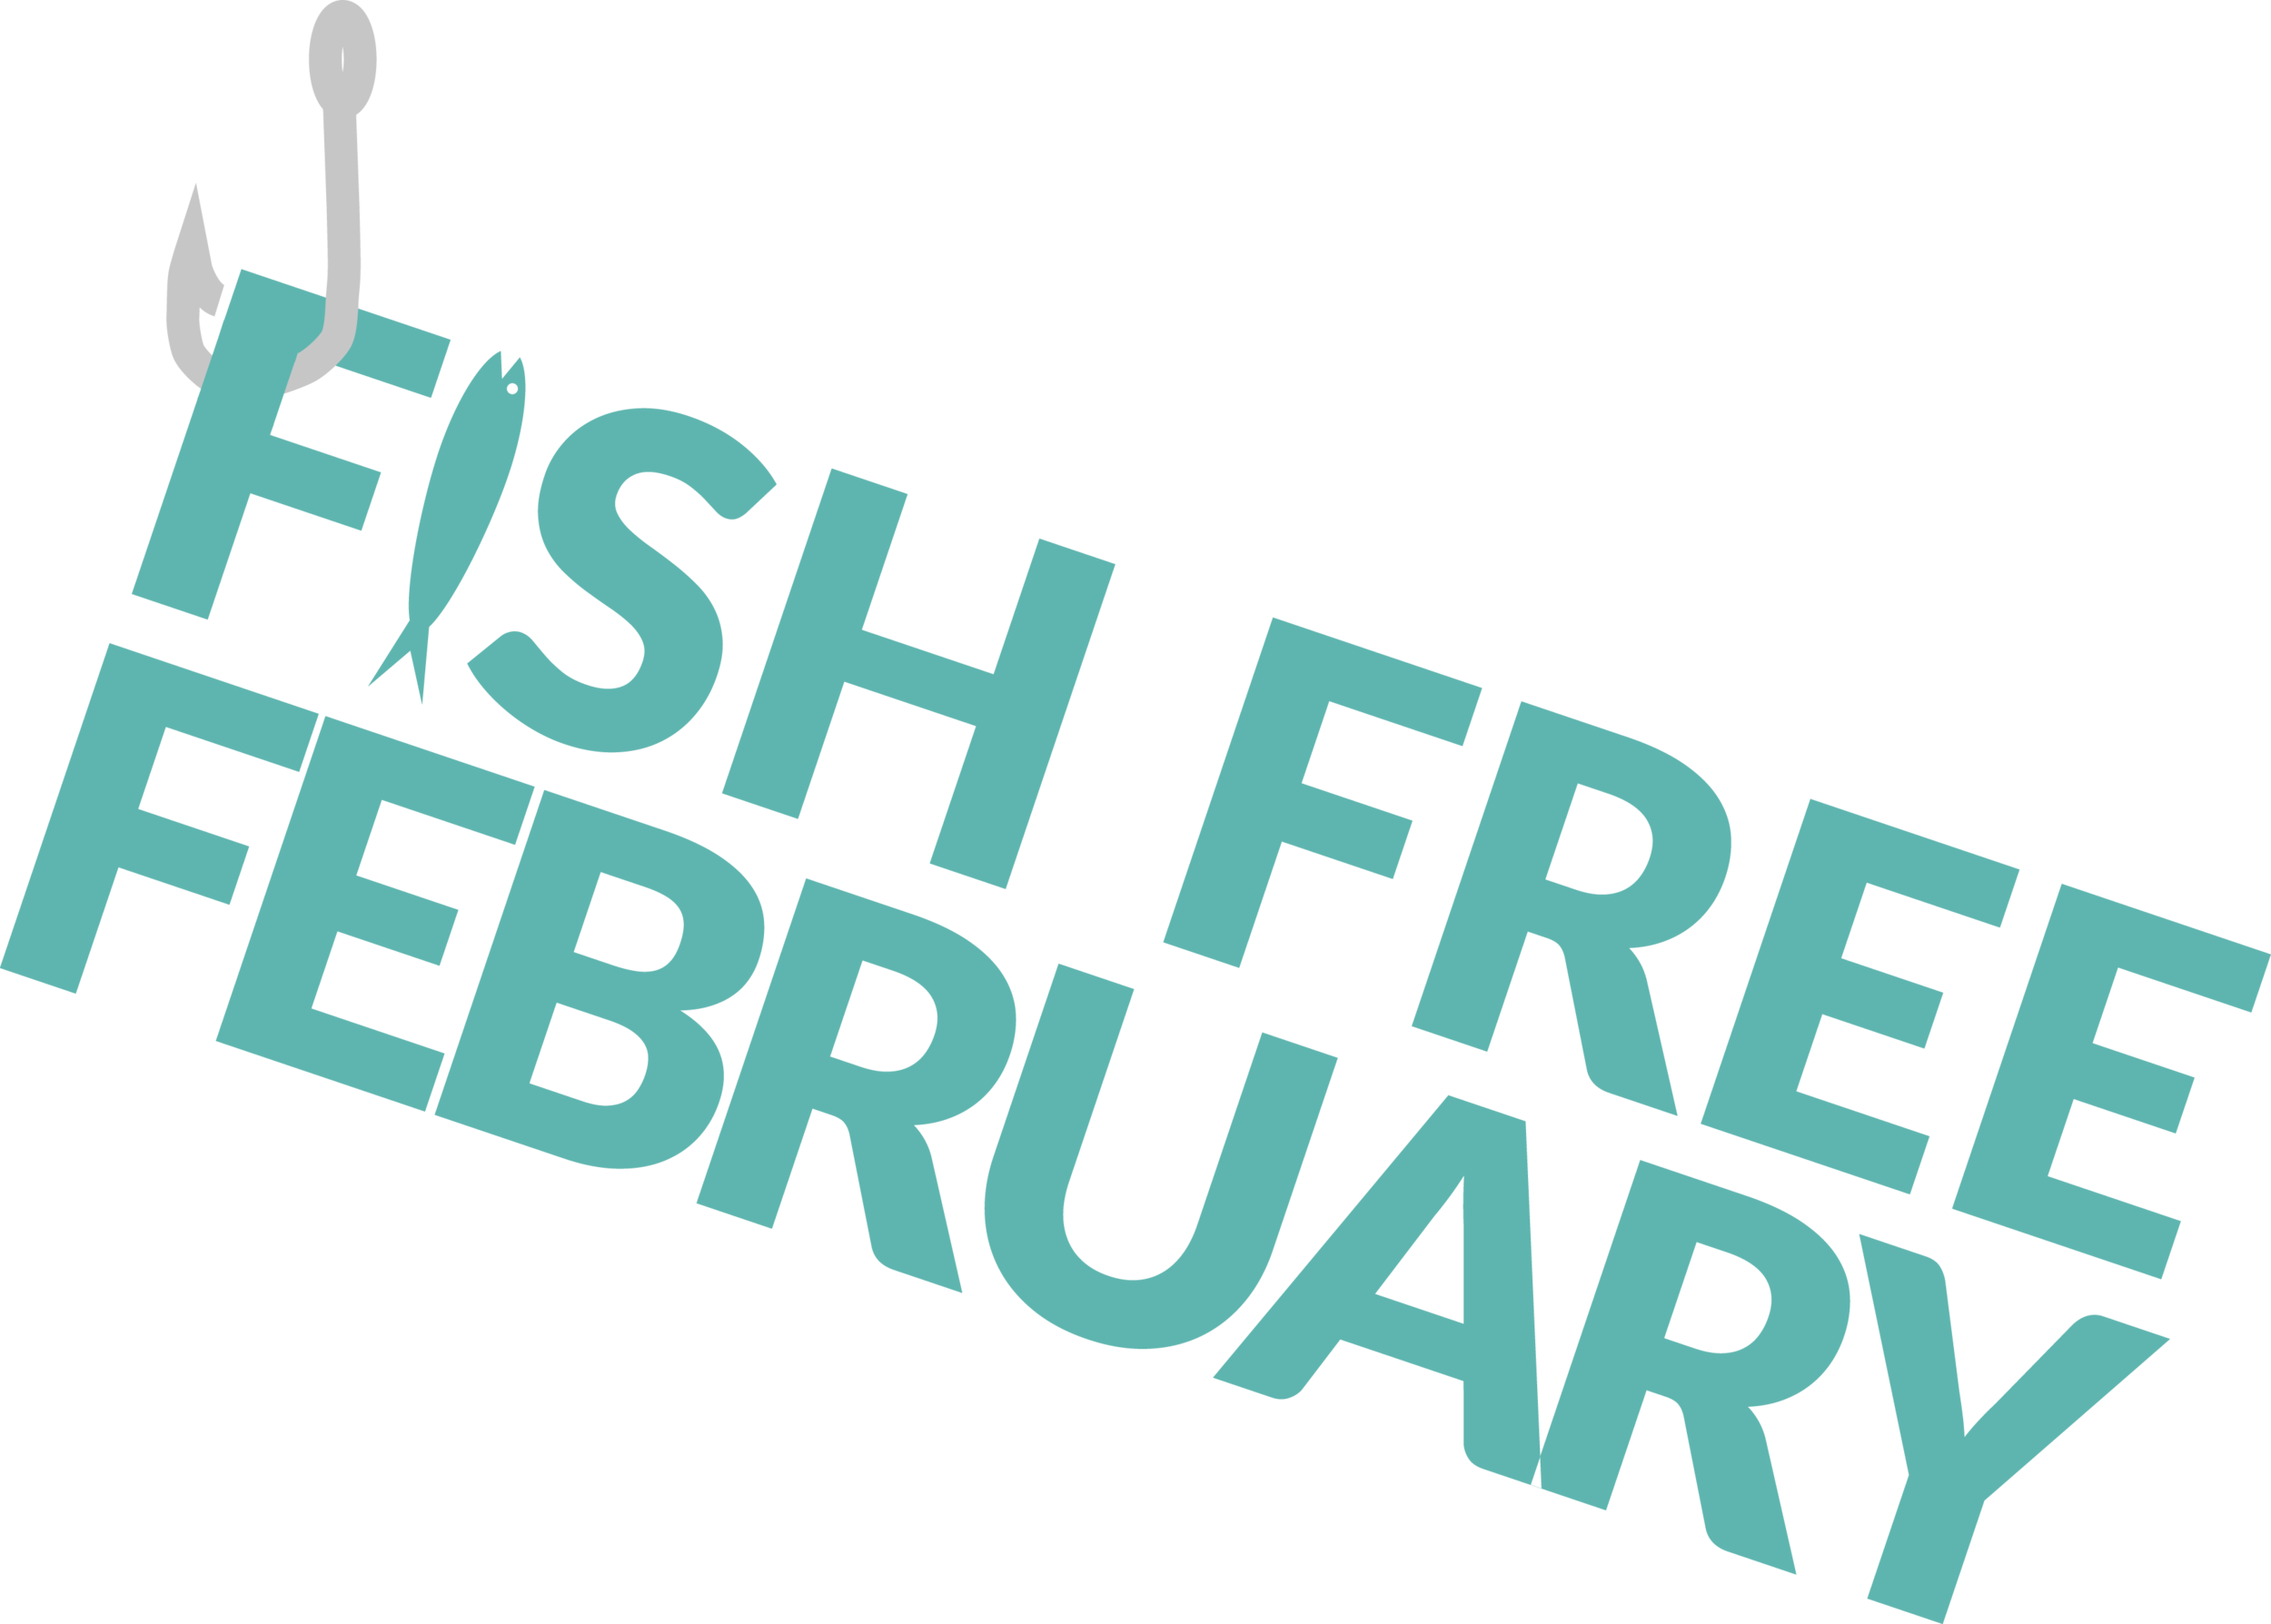 FISH FREE FEBRUARY